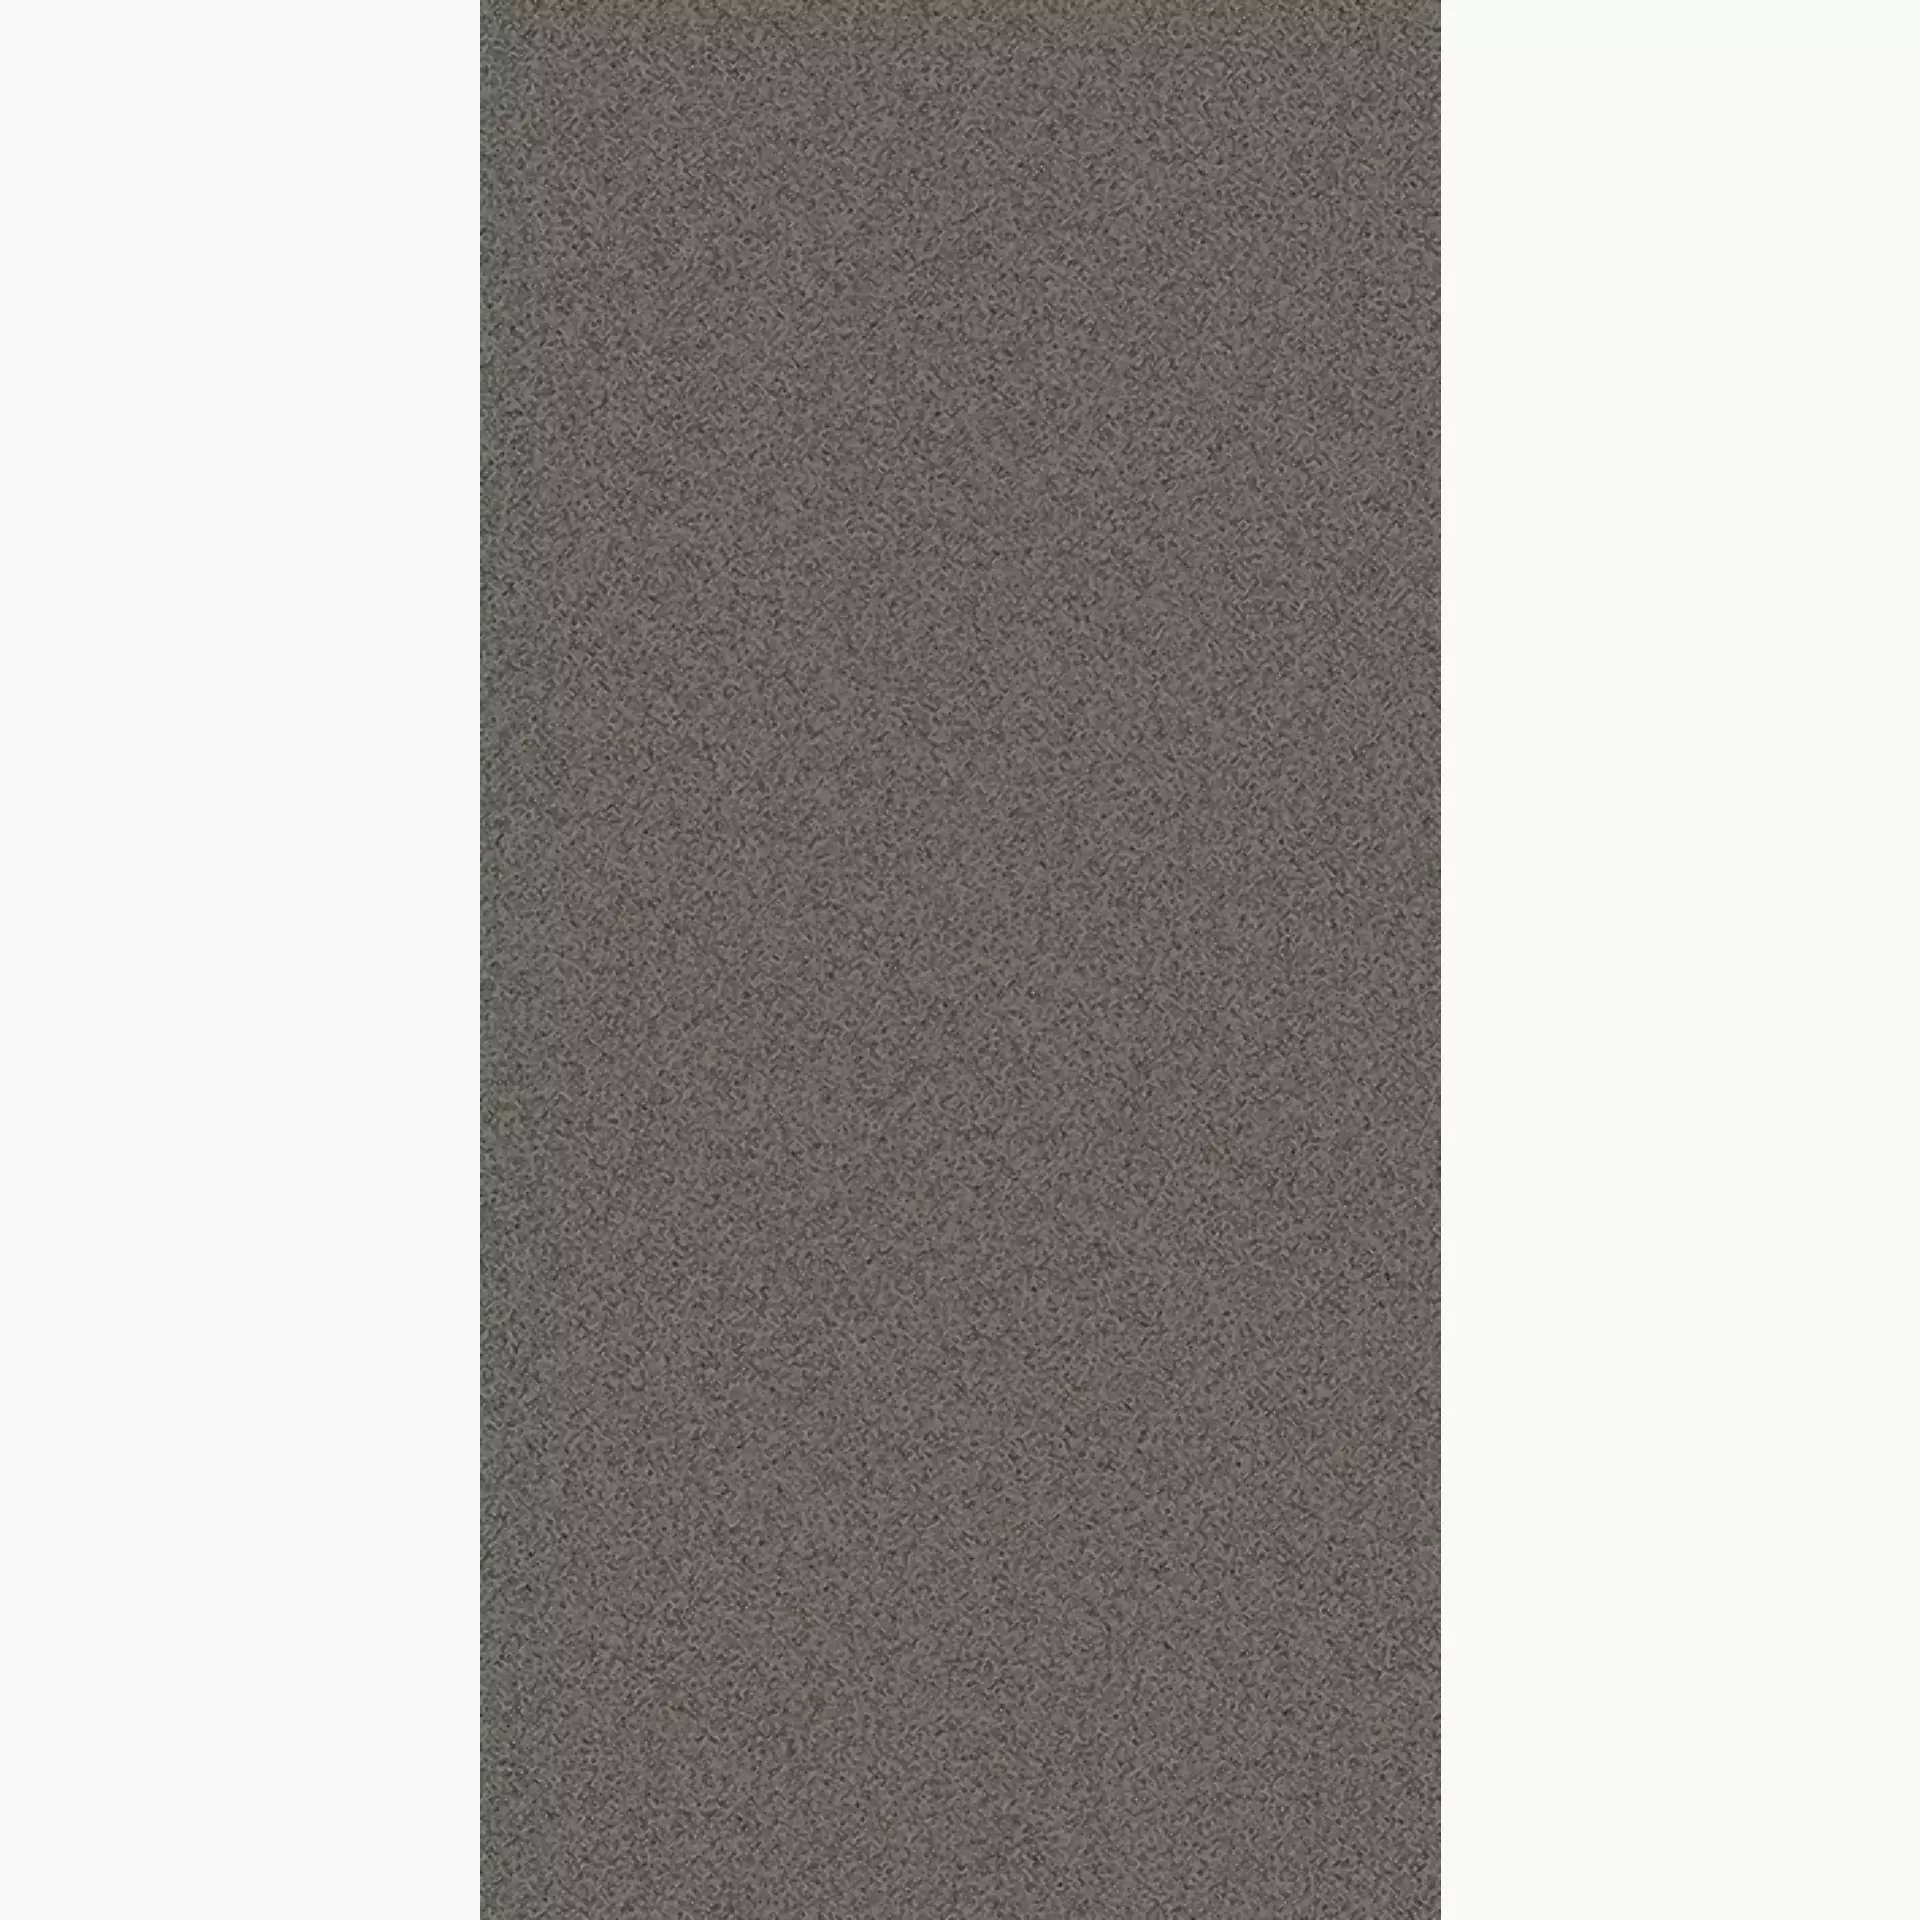 Villeroy & Boch Pure Line 2.0 Concrete Grey Matt 2754-UL62 30x60cm rectified 12mm